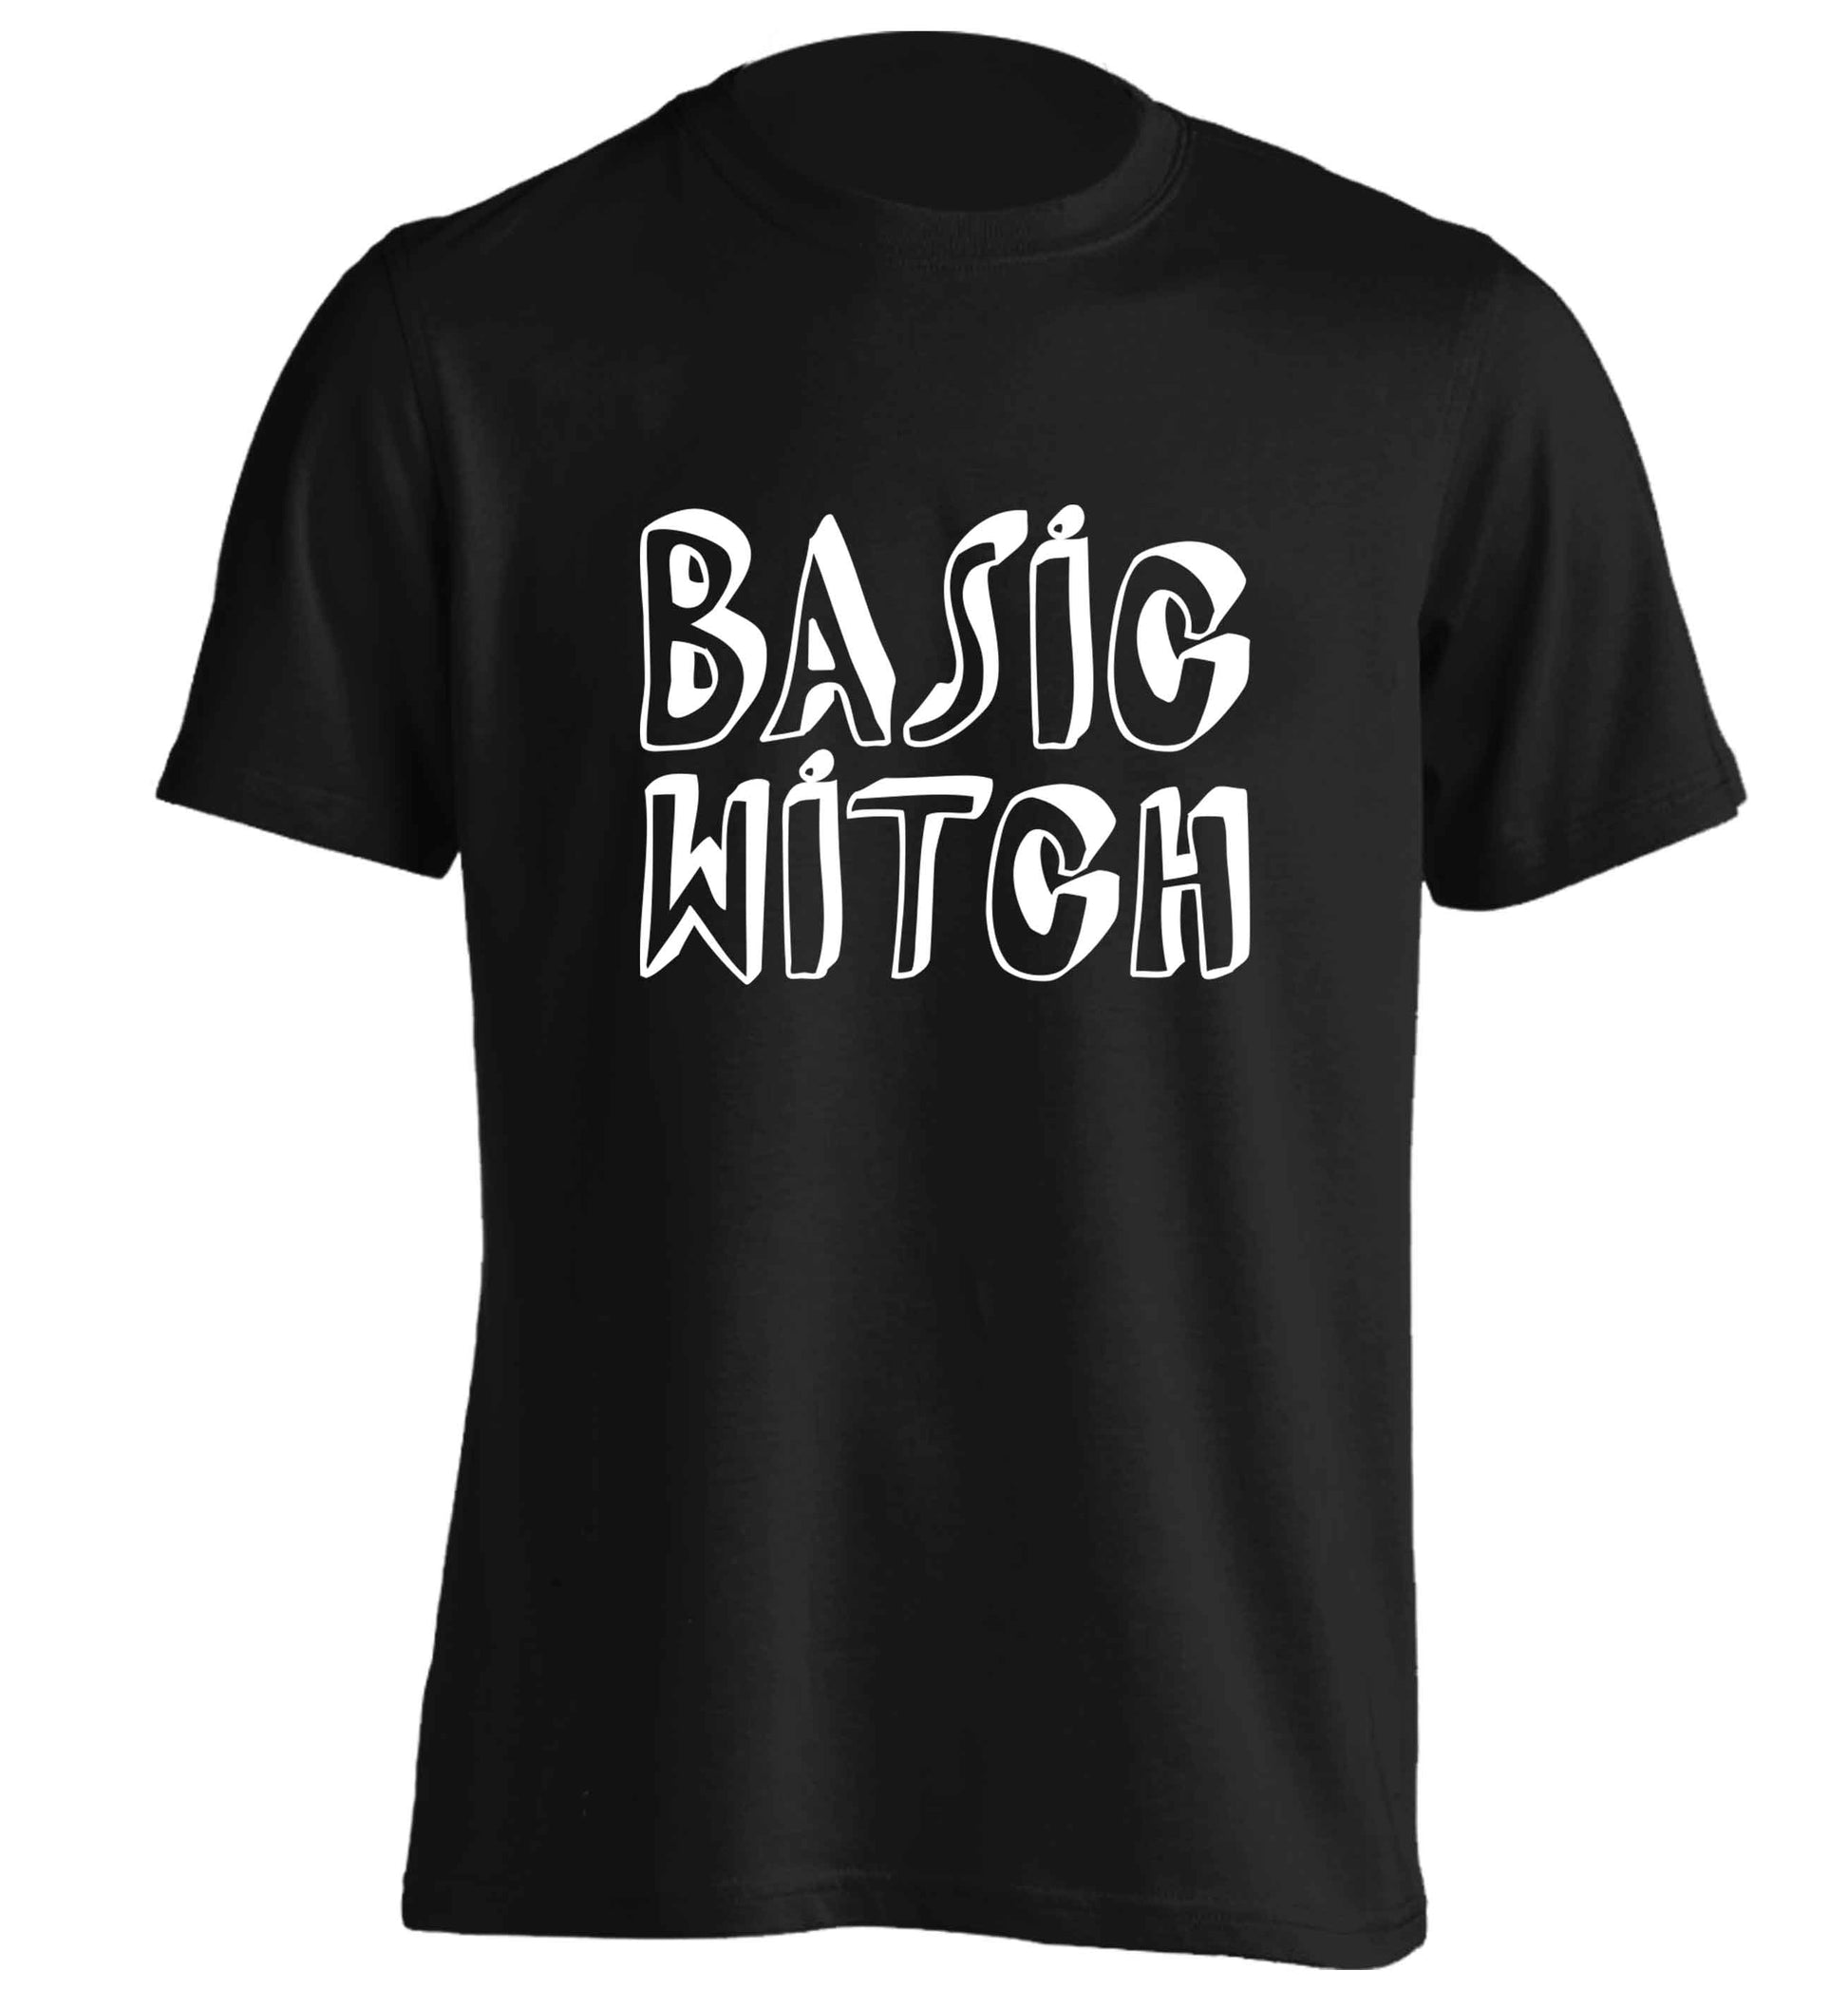 Basic witch adults unisex black Tshirt 2XL